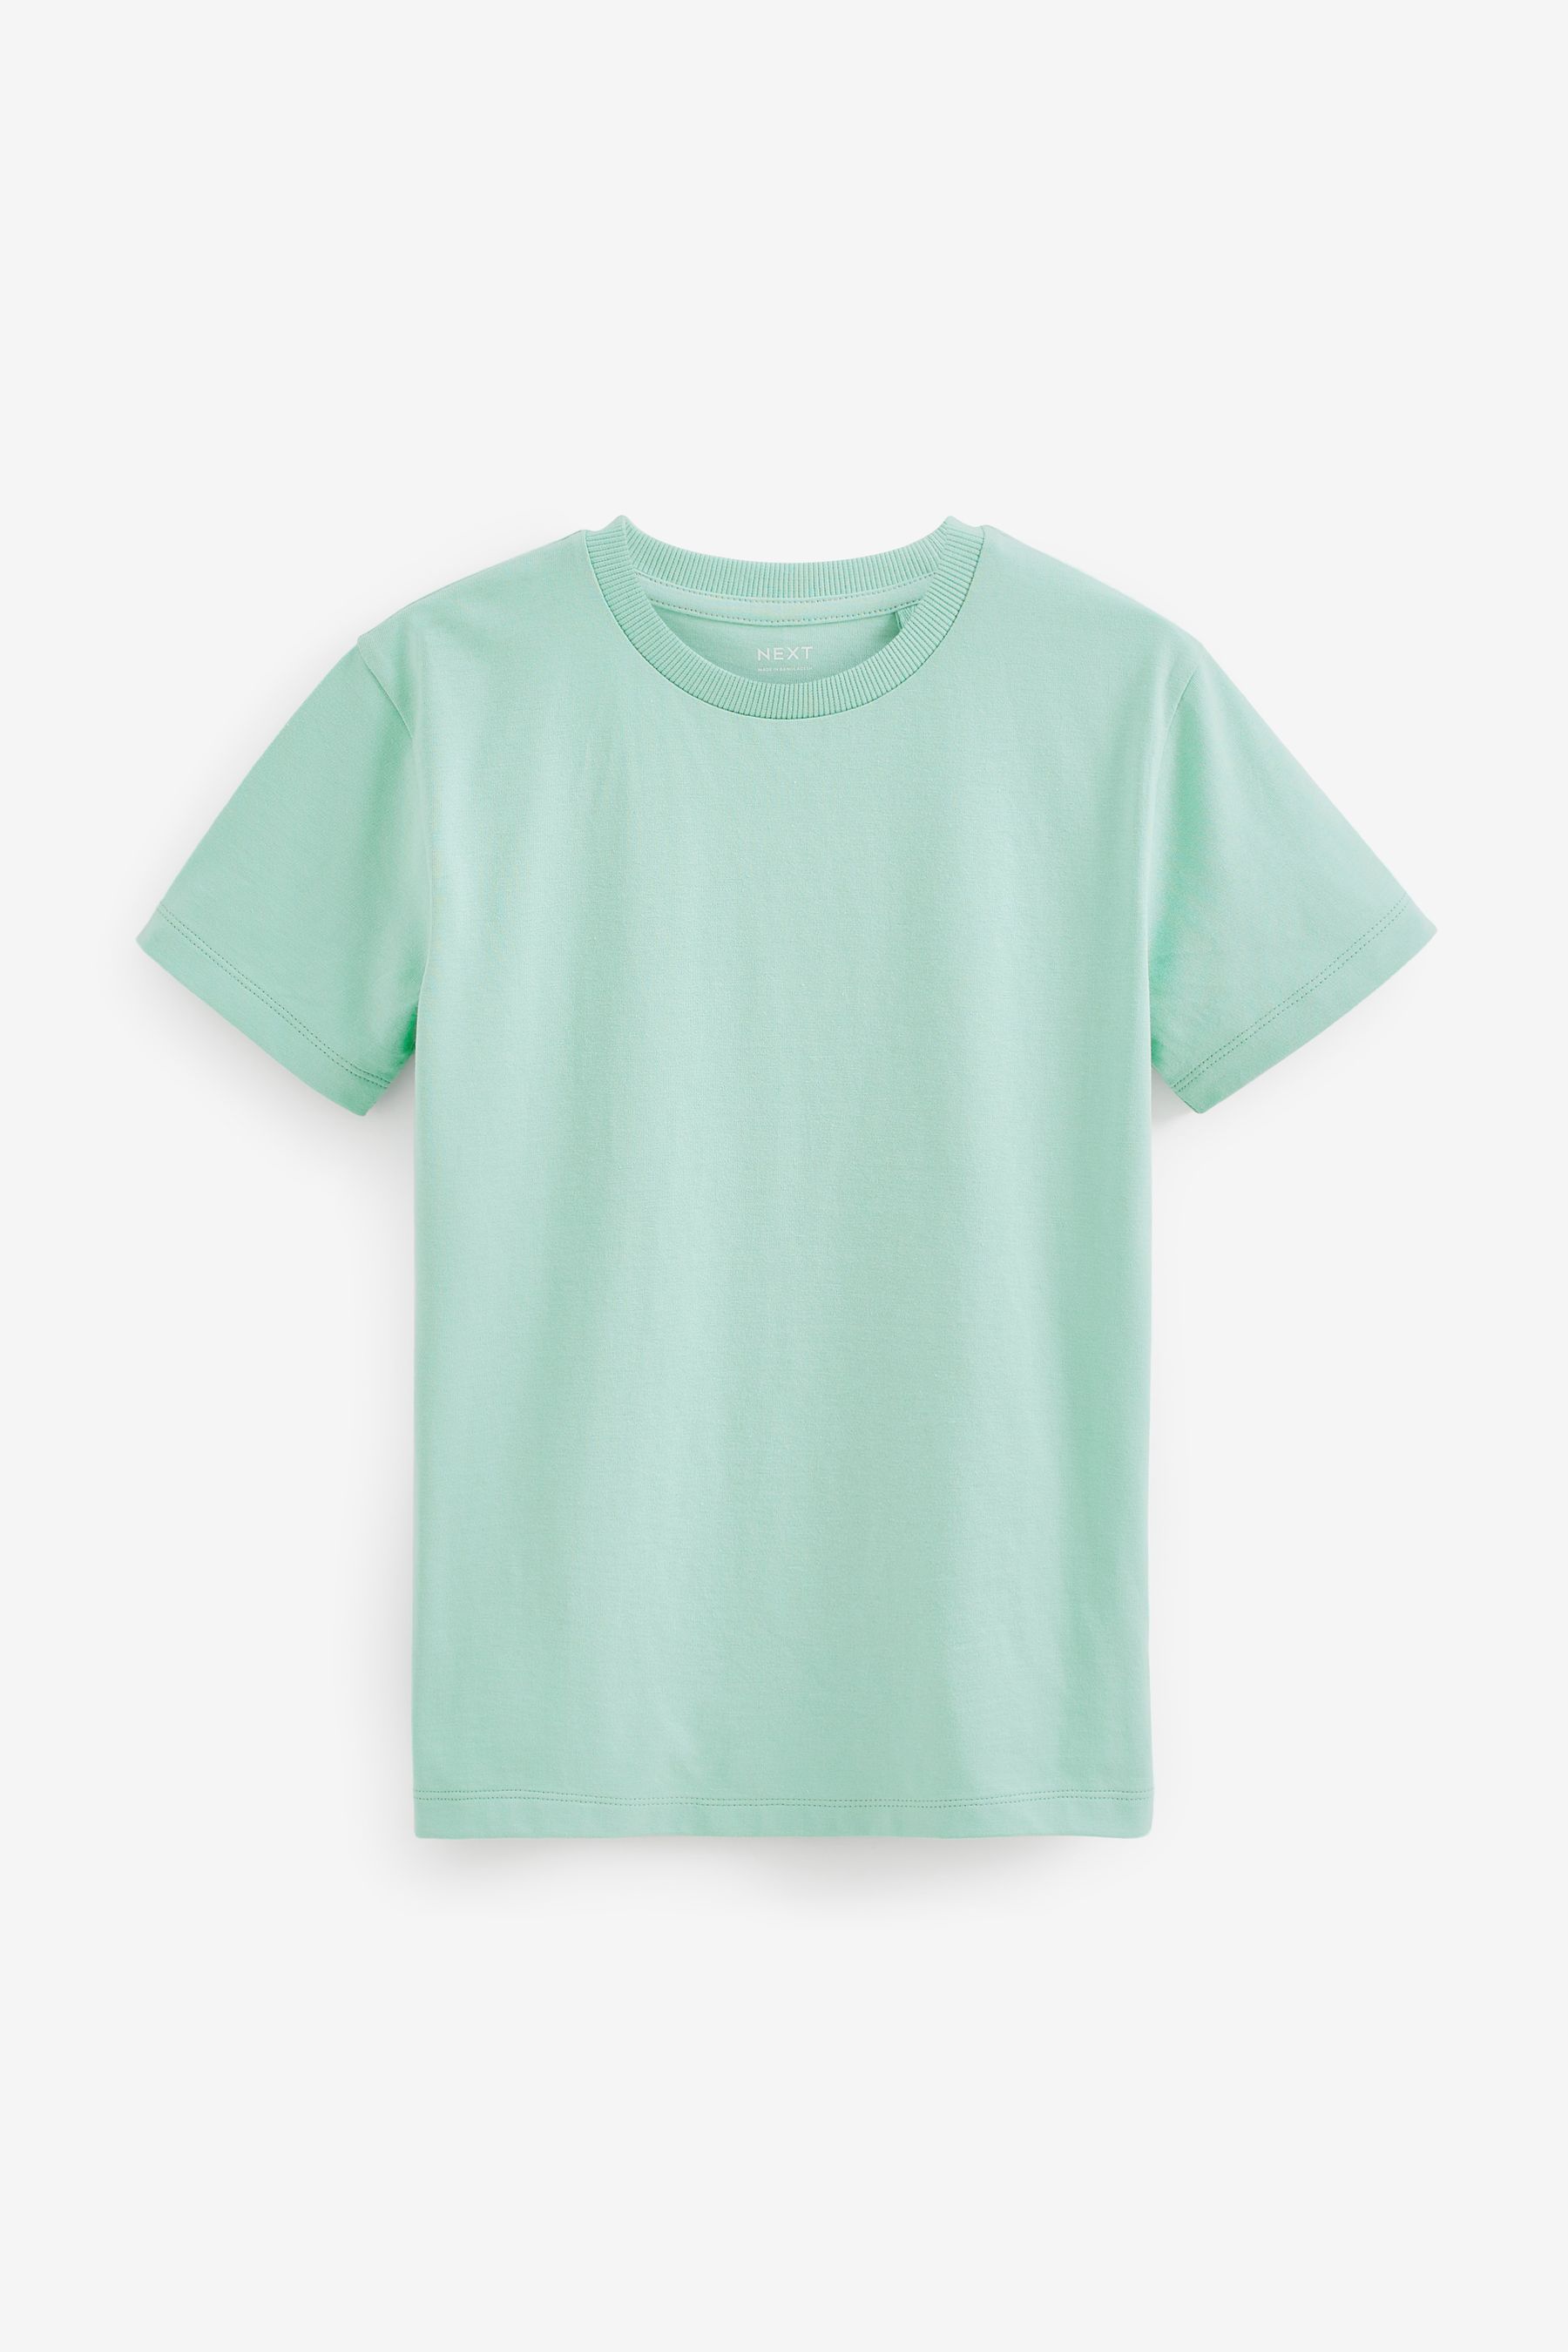 Buy Mint Green Short Sleeve T-Shirt (3-16yrs) from the Next UK online shop